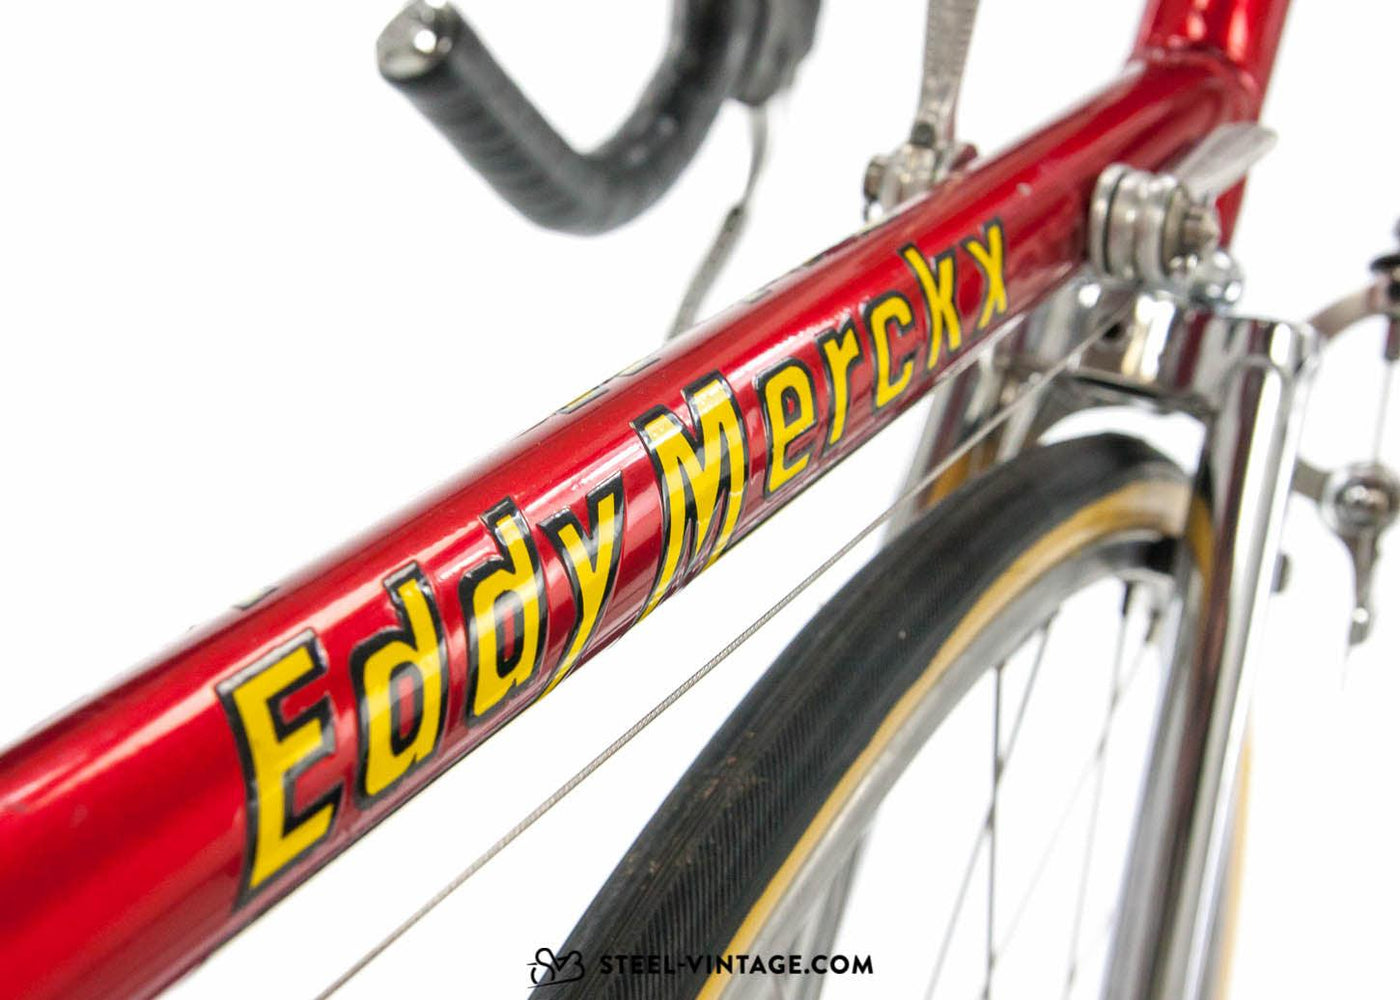 Eddy Merckx Professional Classic Road Bike 1980s - Steel Vintage Bikes